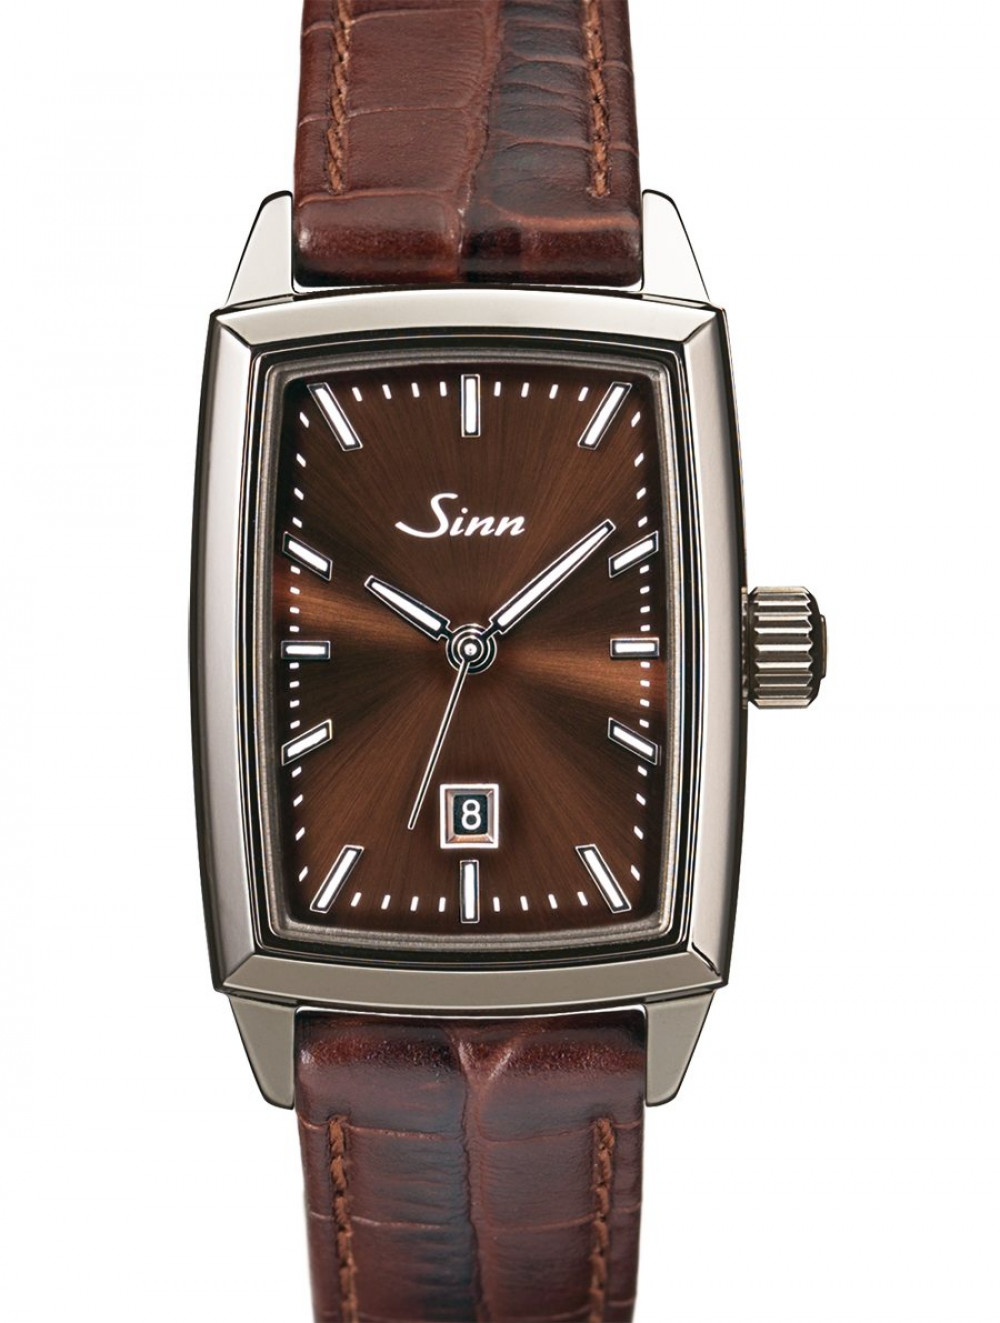 Zegarek firmy Sinn, model Modell 243 Ti M